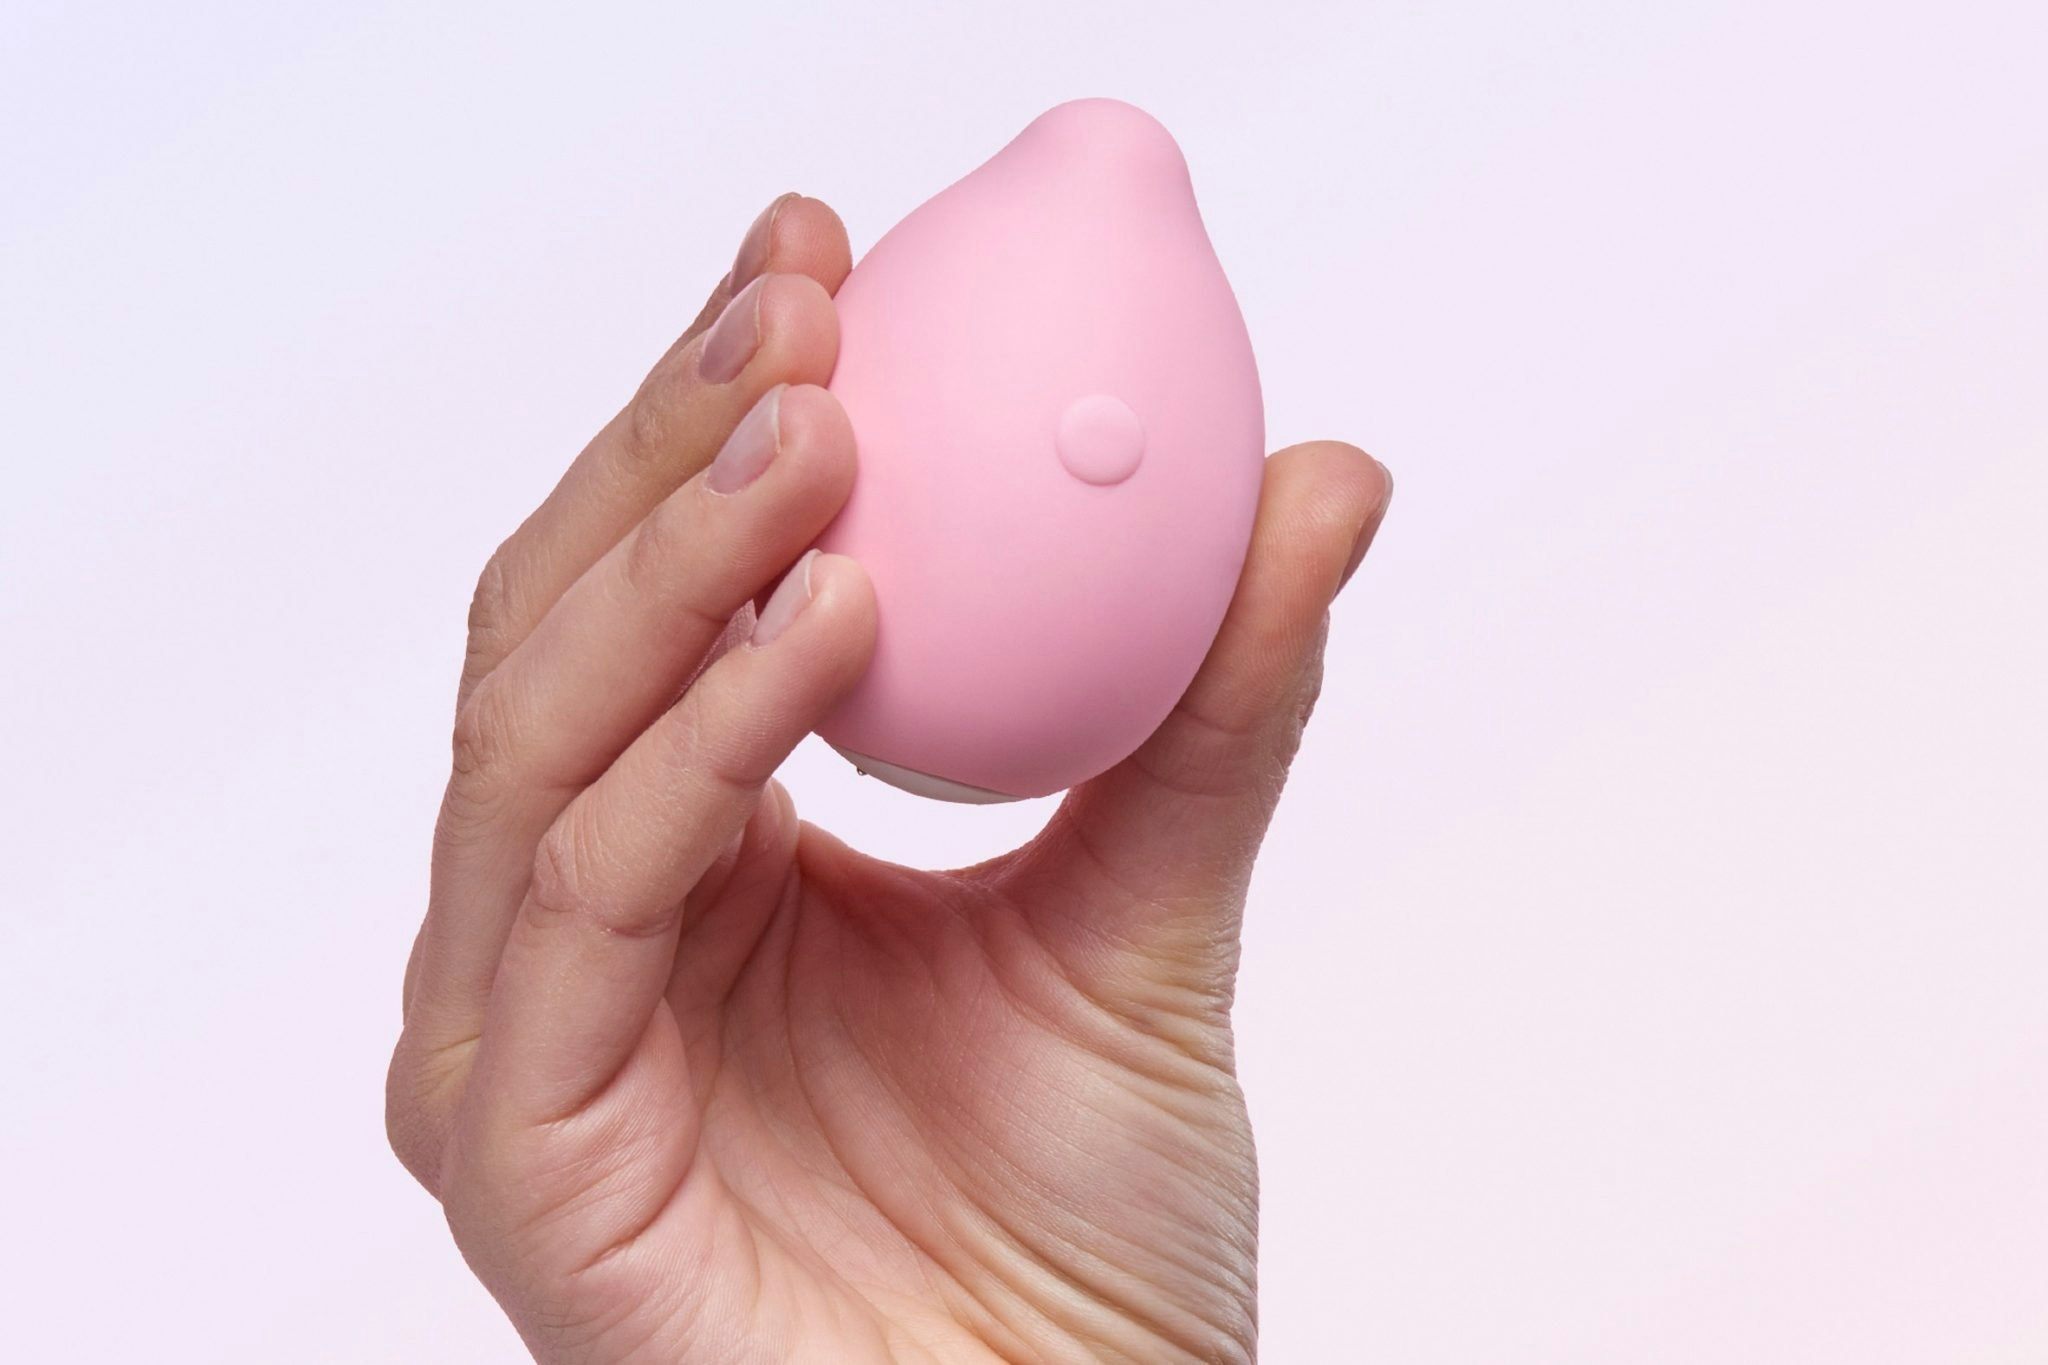 Unbound's egg-shaped vibrator.